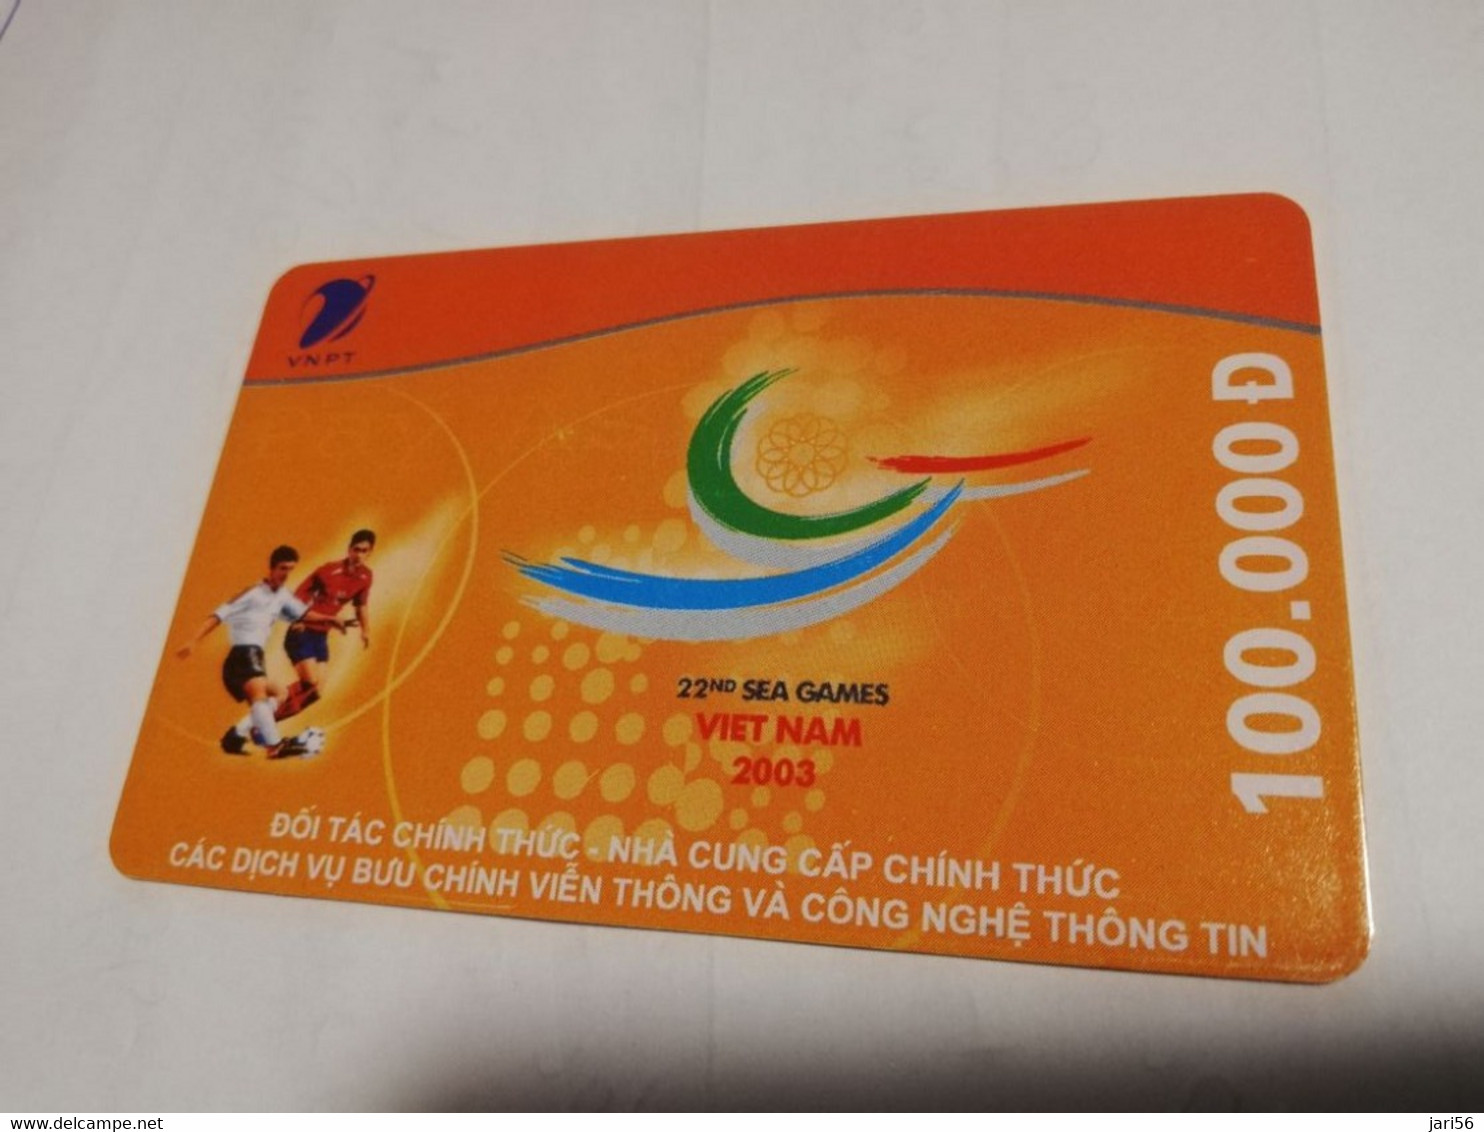 VIETNAM  100.000 D  22E SEA GAMES VIETNAM 2003 FOTBOL PLAYERS    PREPAID  Fine Used Card      **4012** - Vietnam